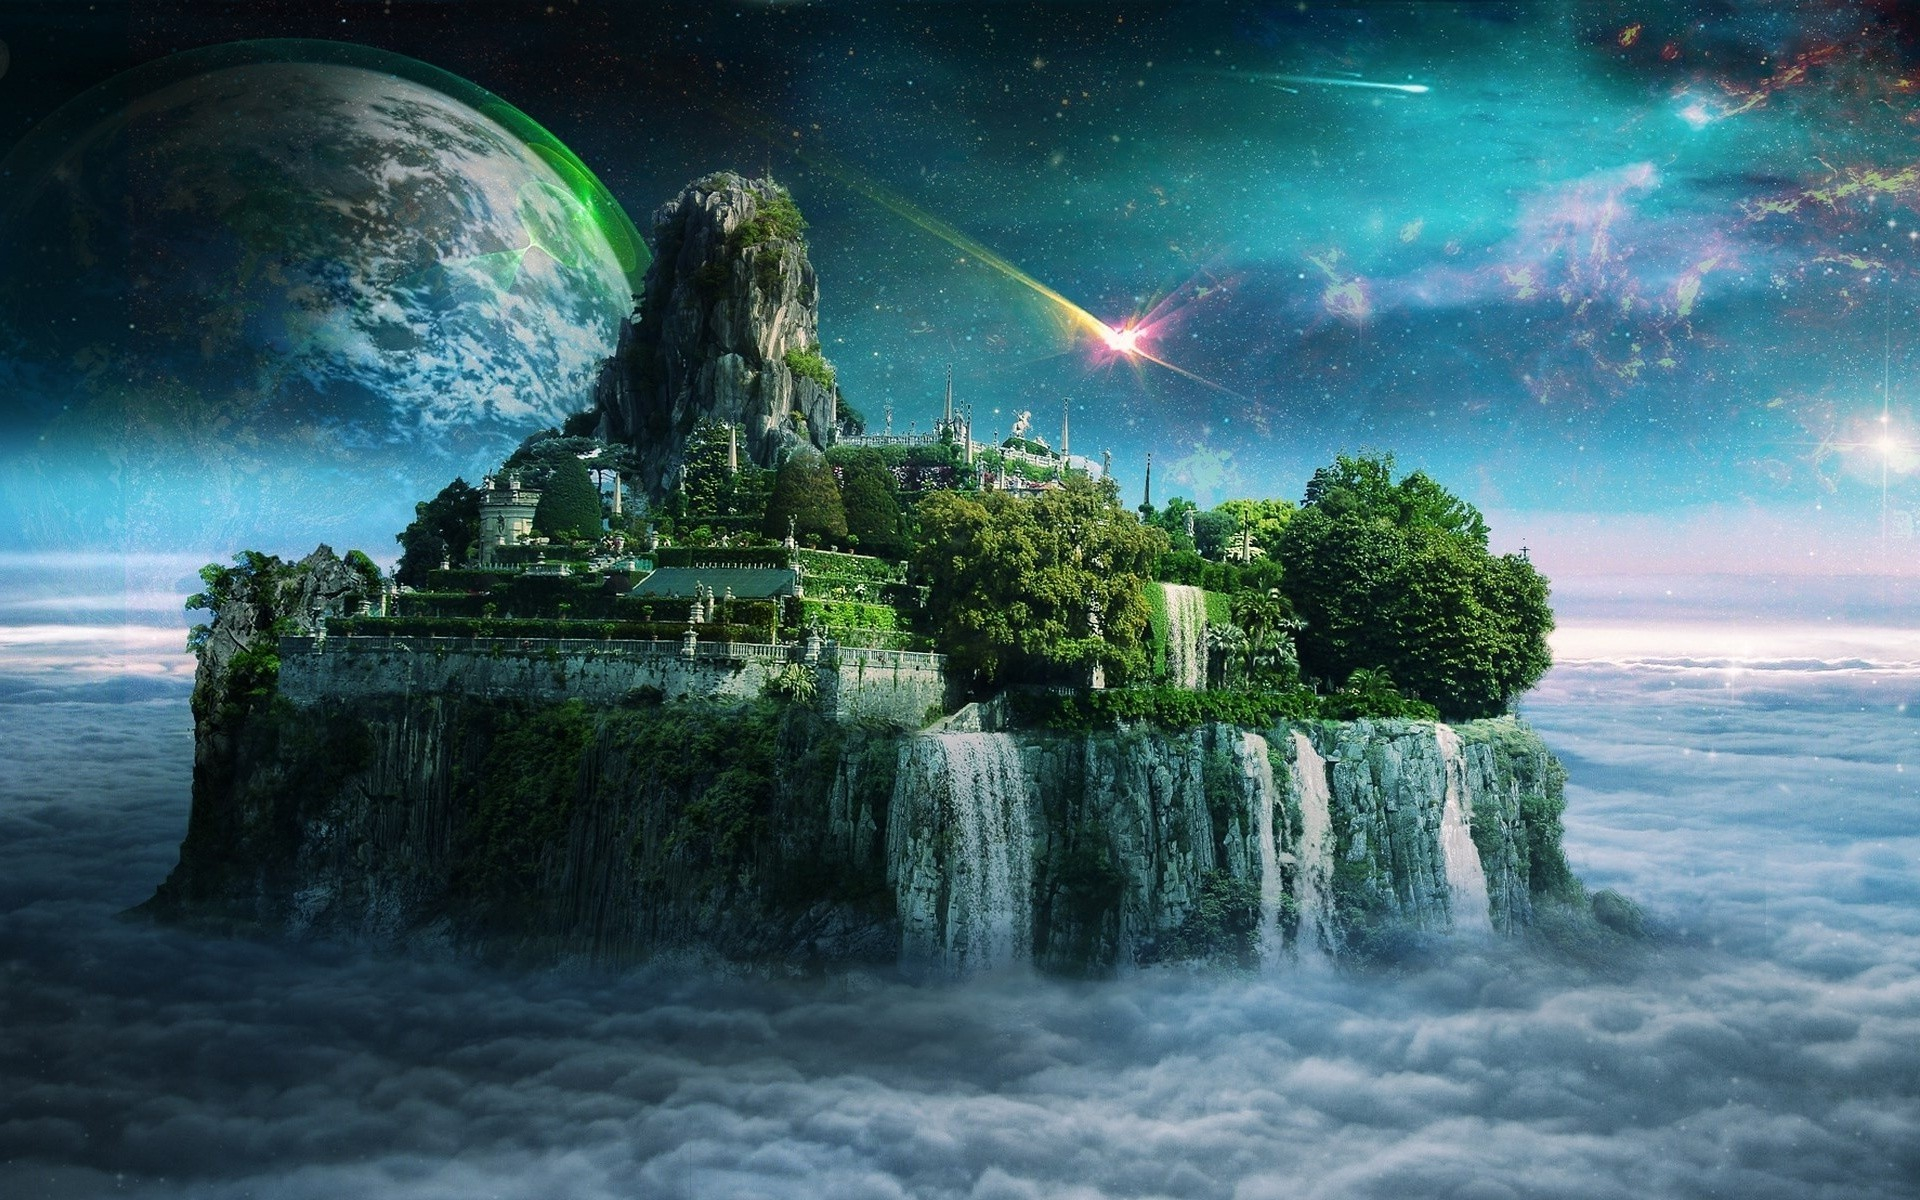 artistic, fantasy, cloud, floating island, landscape, moon, planet